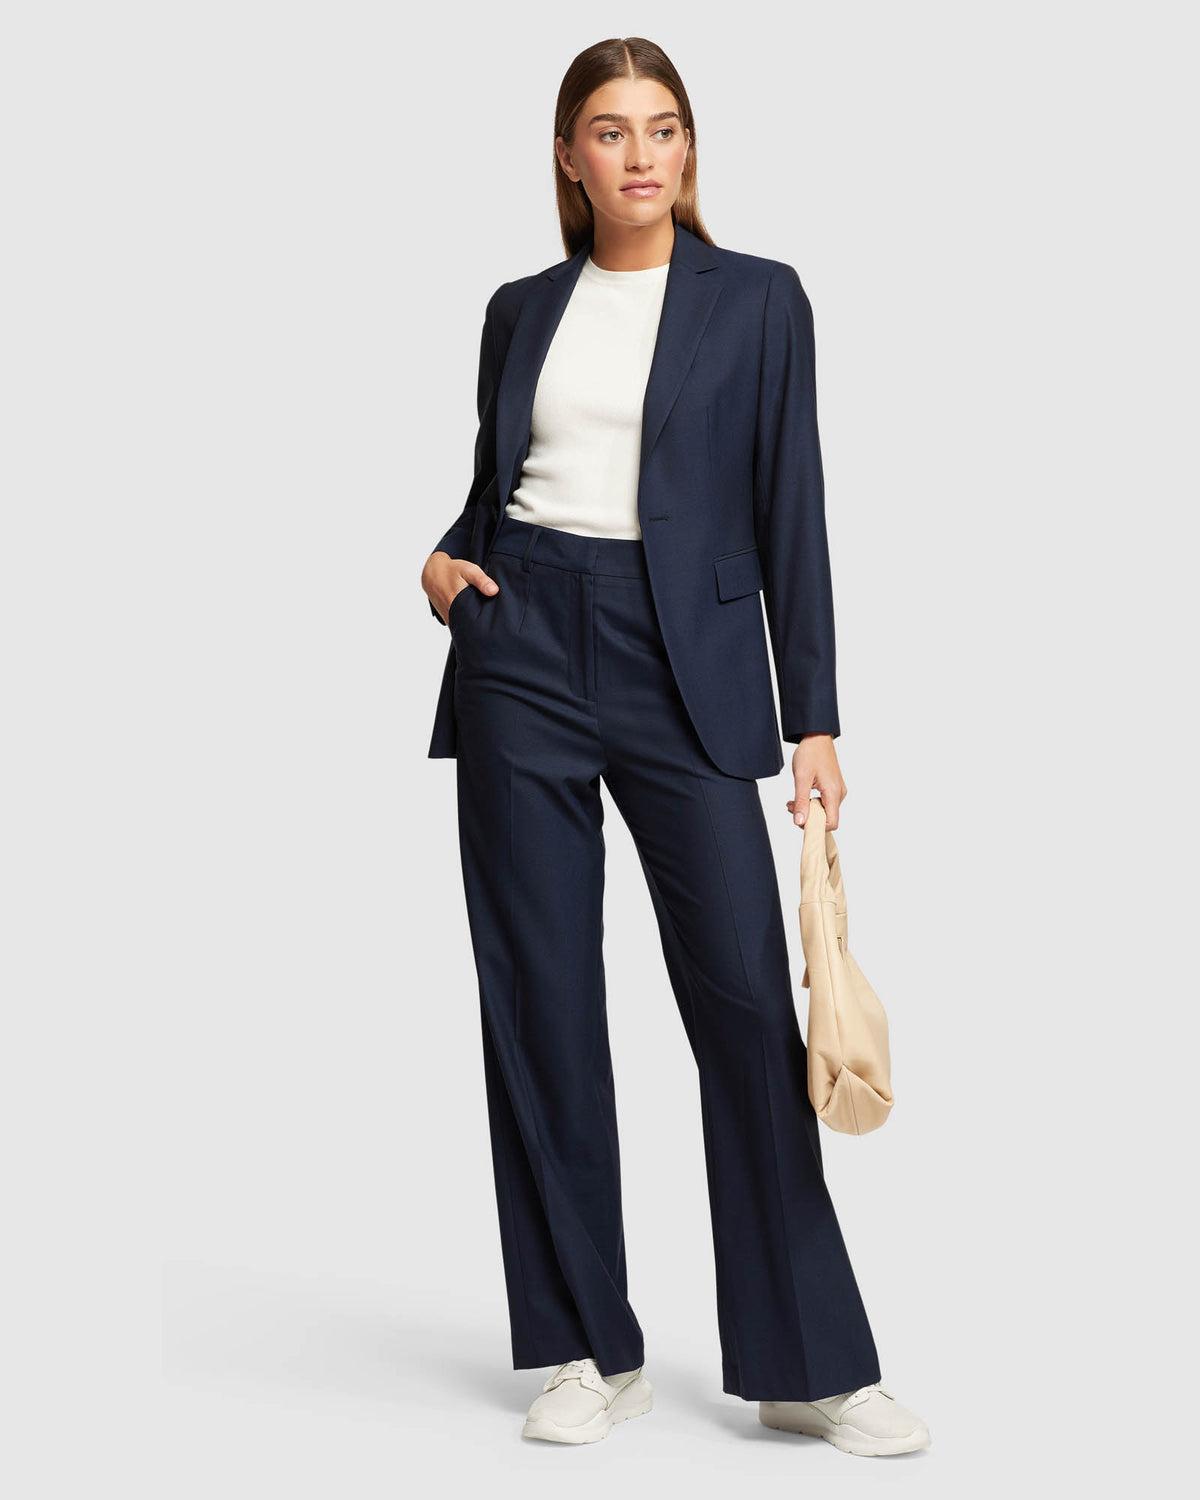 Womens Formal Elegant Business Suit Jacket Blazer and Dress Pants 2PC  Outfit Set | eBay